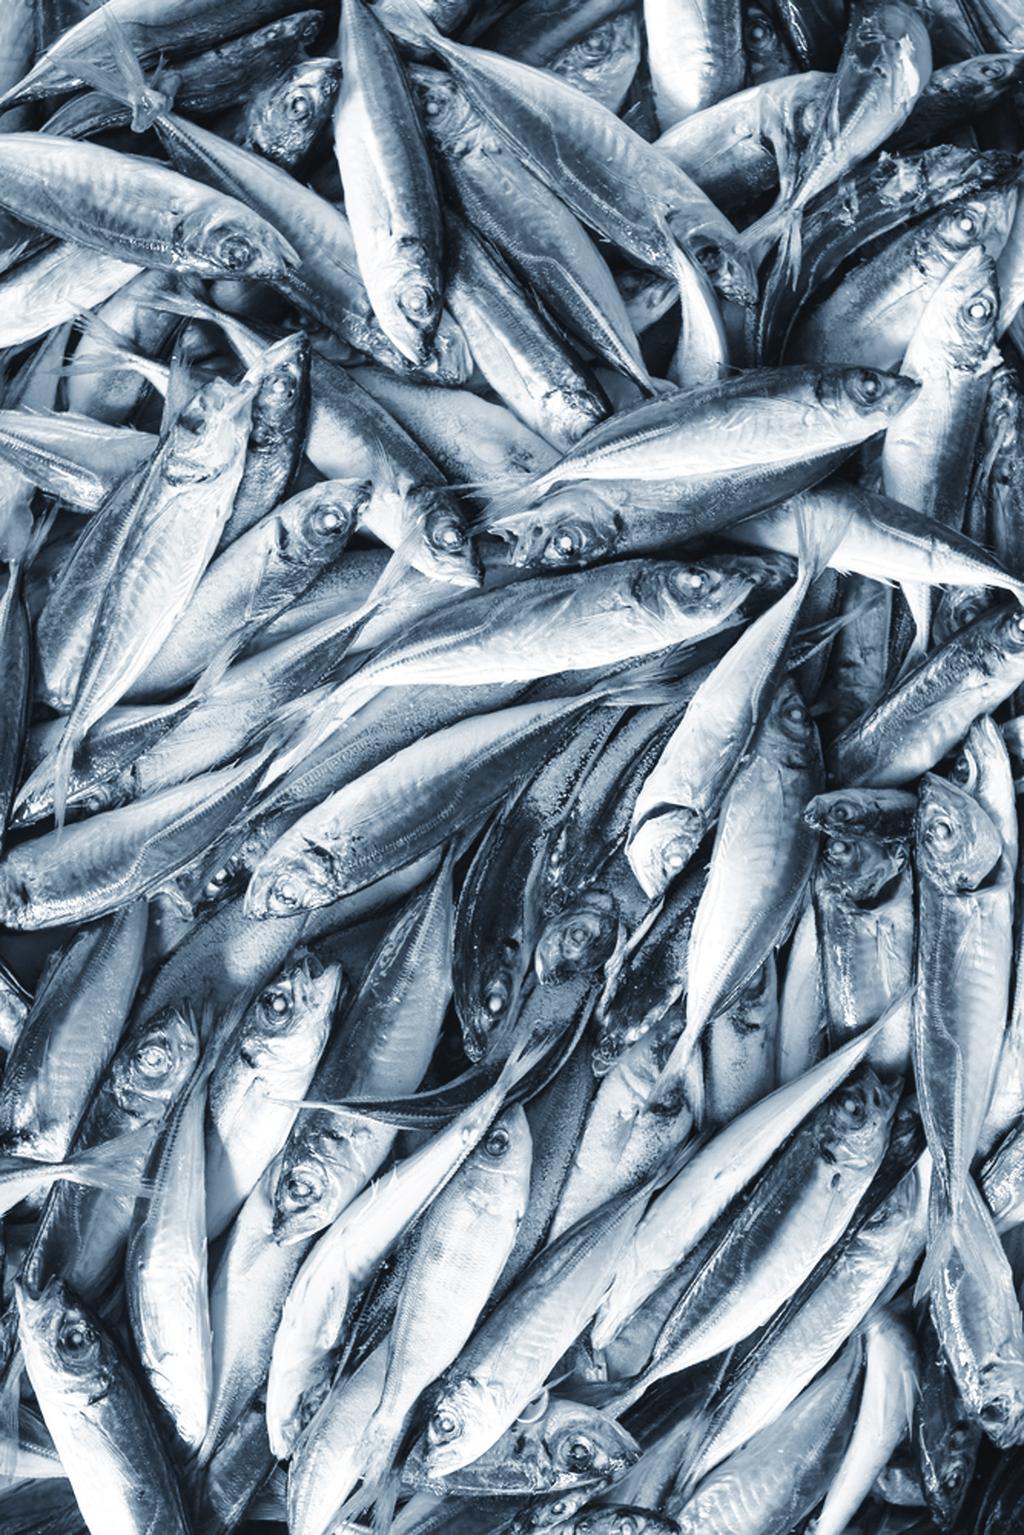 CFP discards ANNUAL COST Economic value of UK dumped fish 130 million